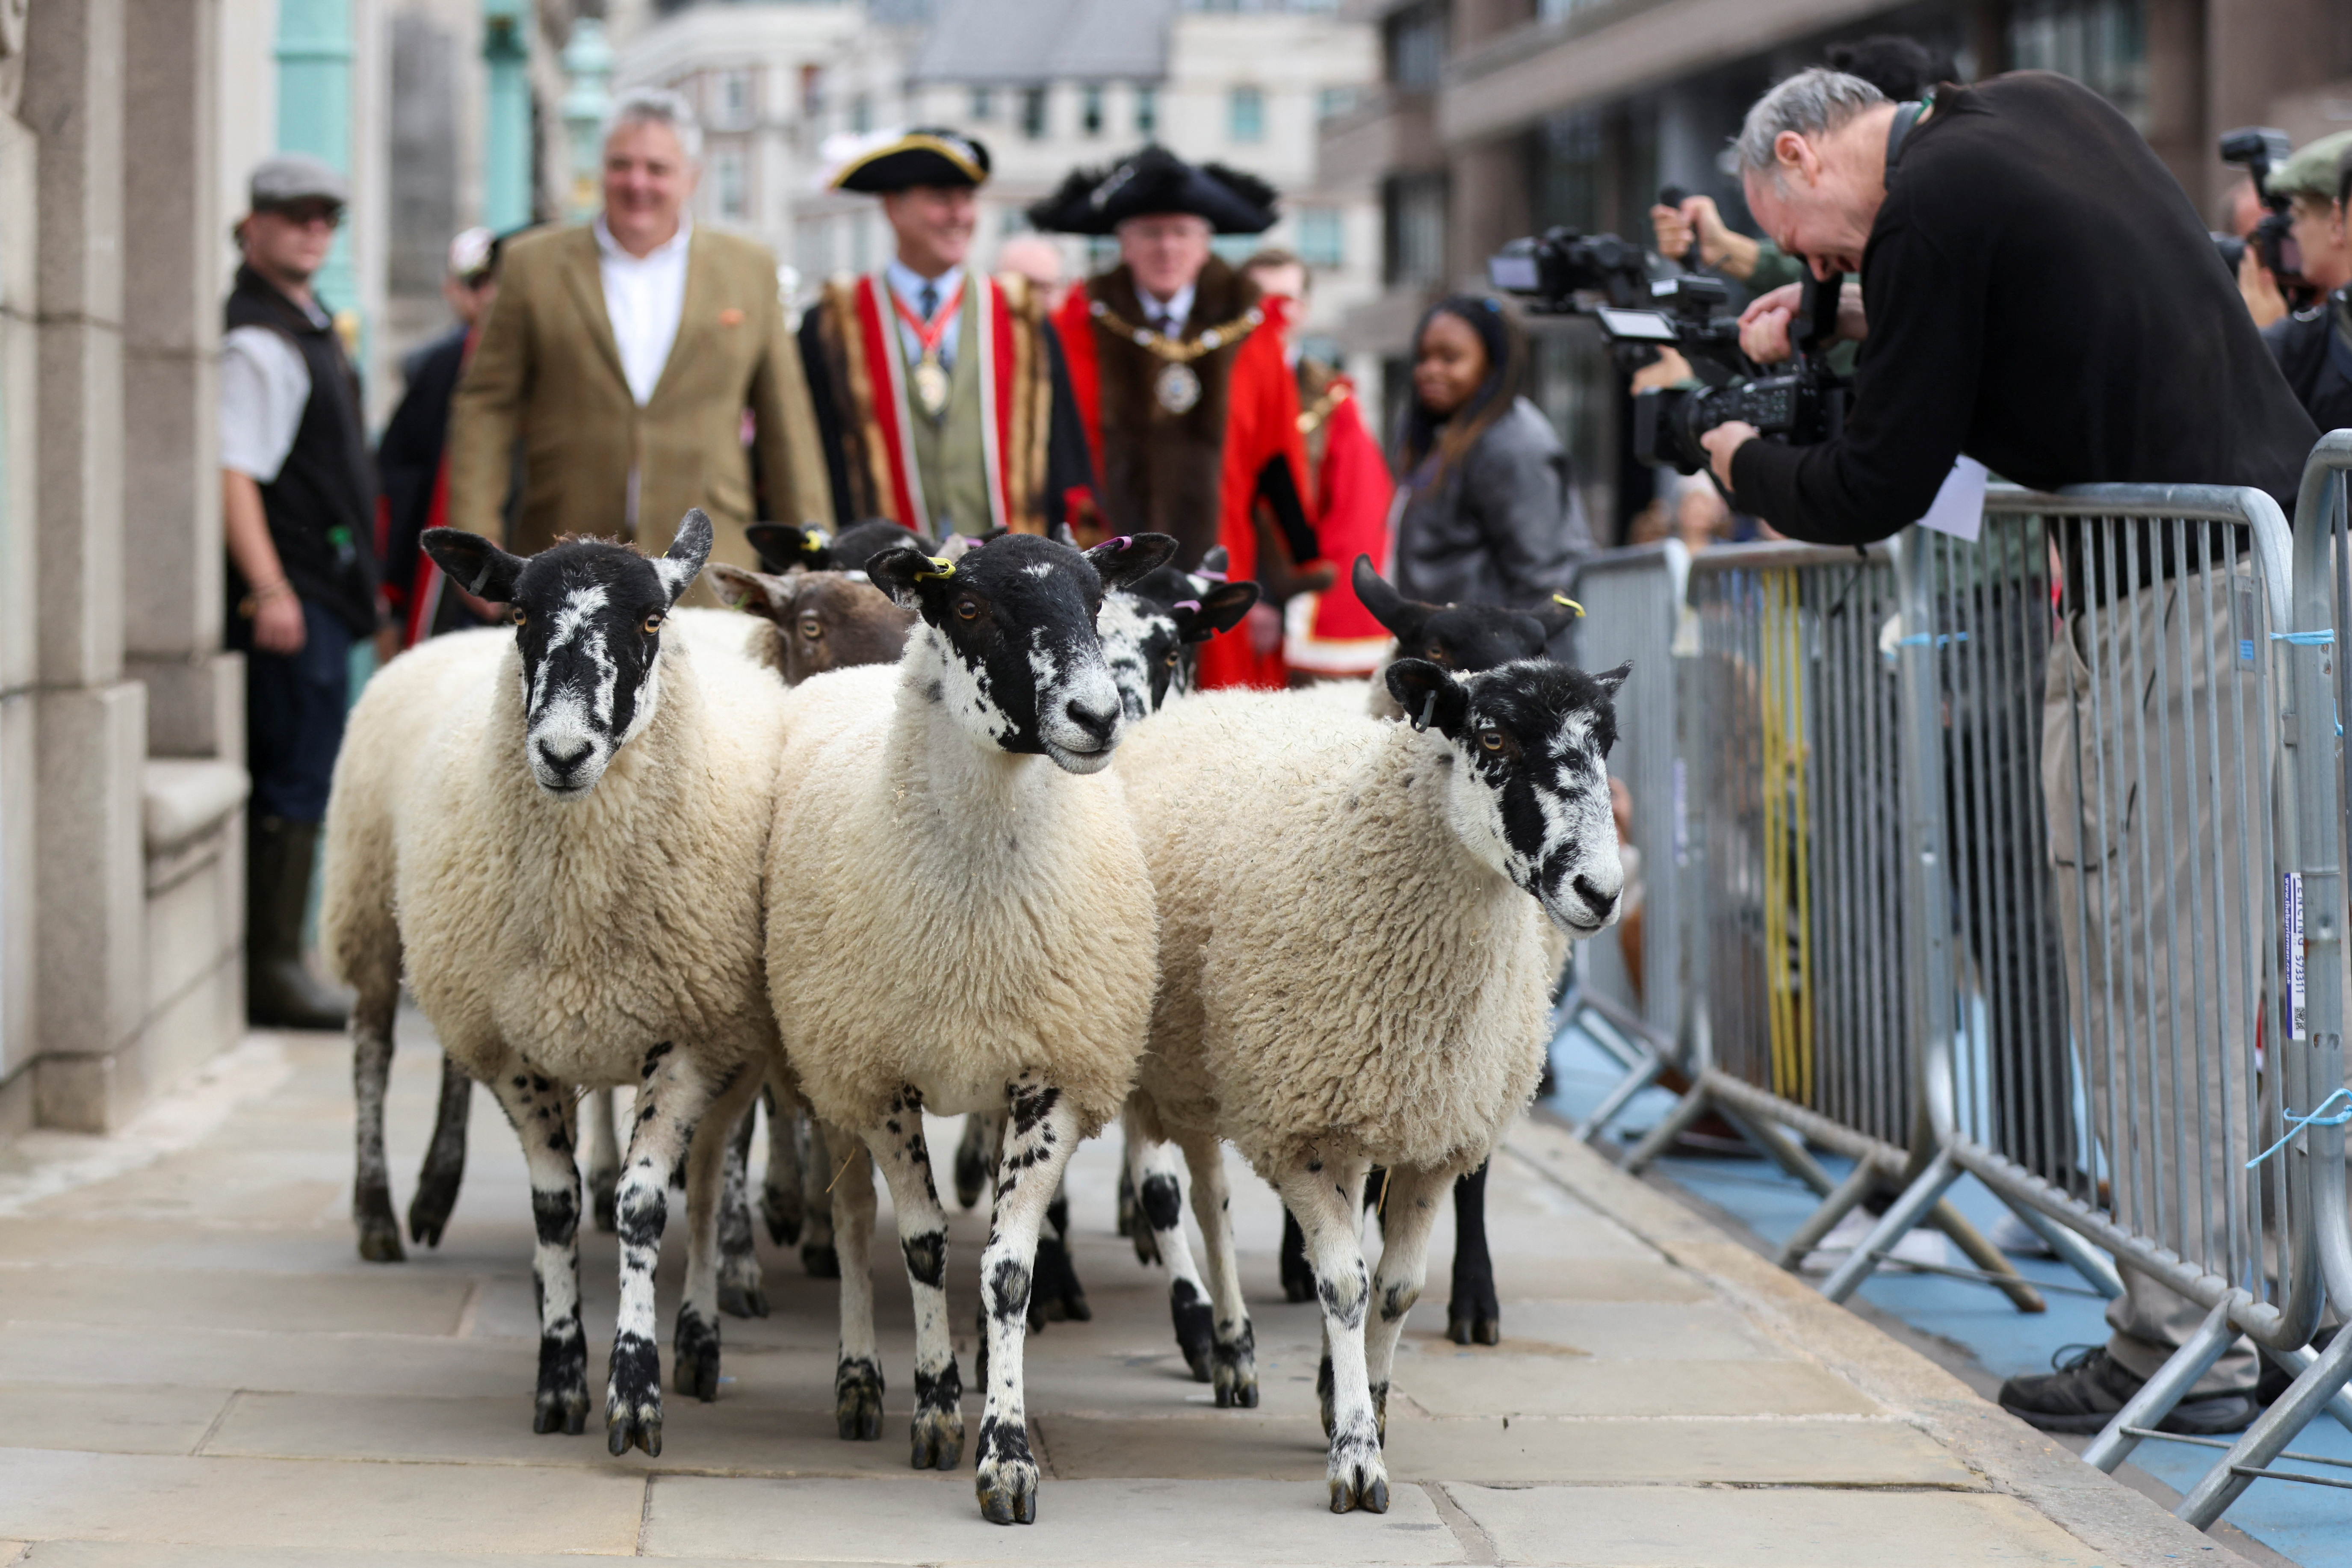 London's annual Sheep Drive